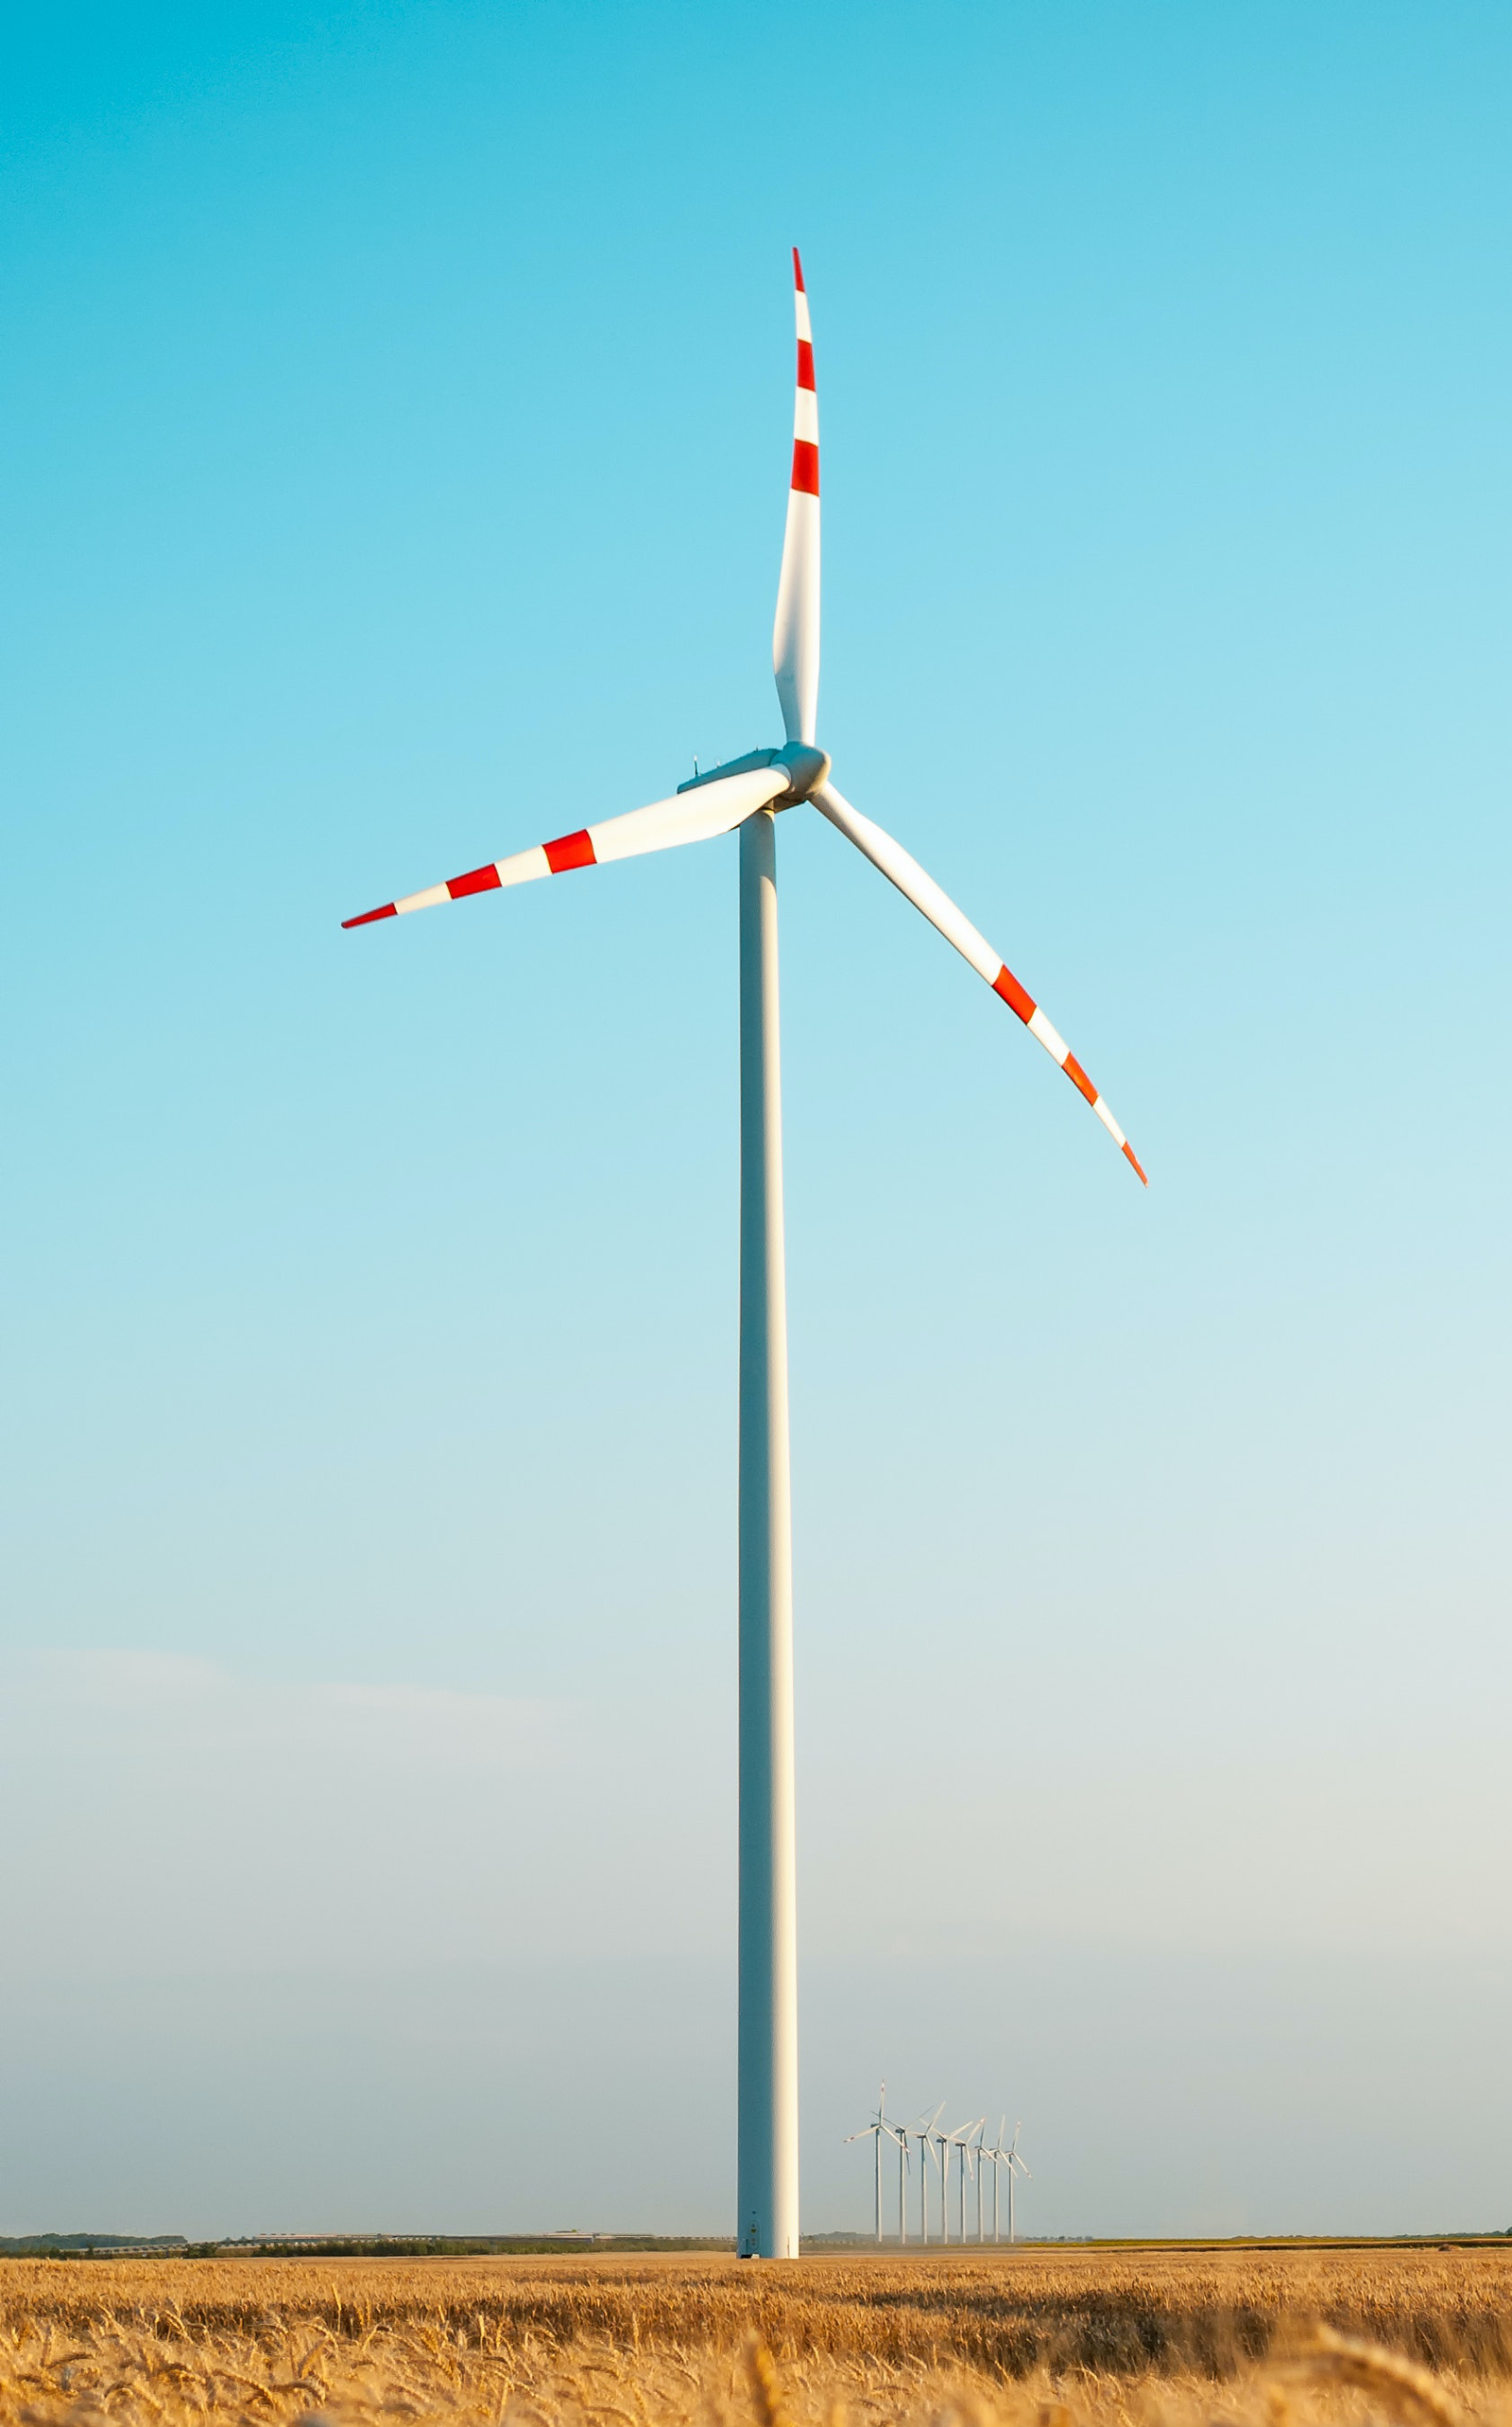 Tall Industrial Wind Energy Turbine Rural Field 